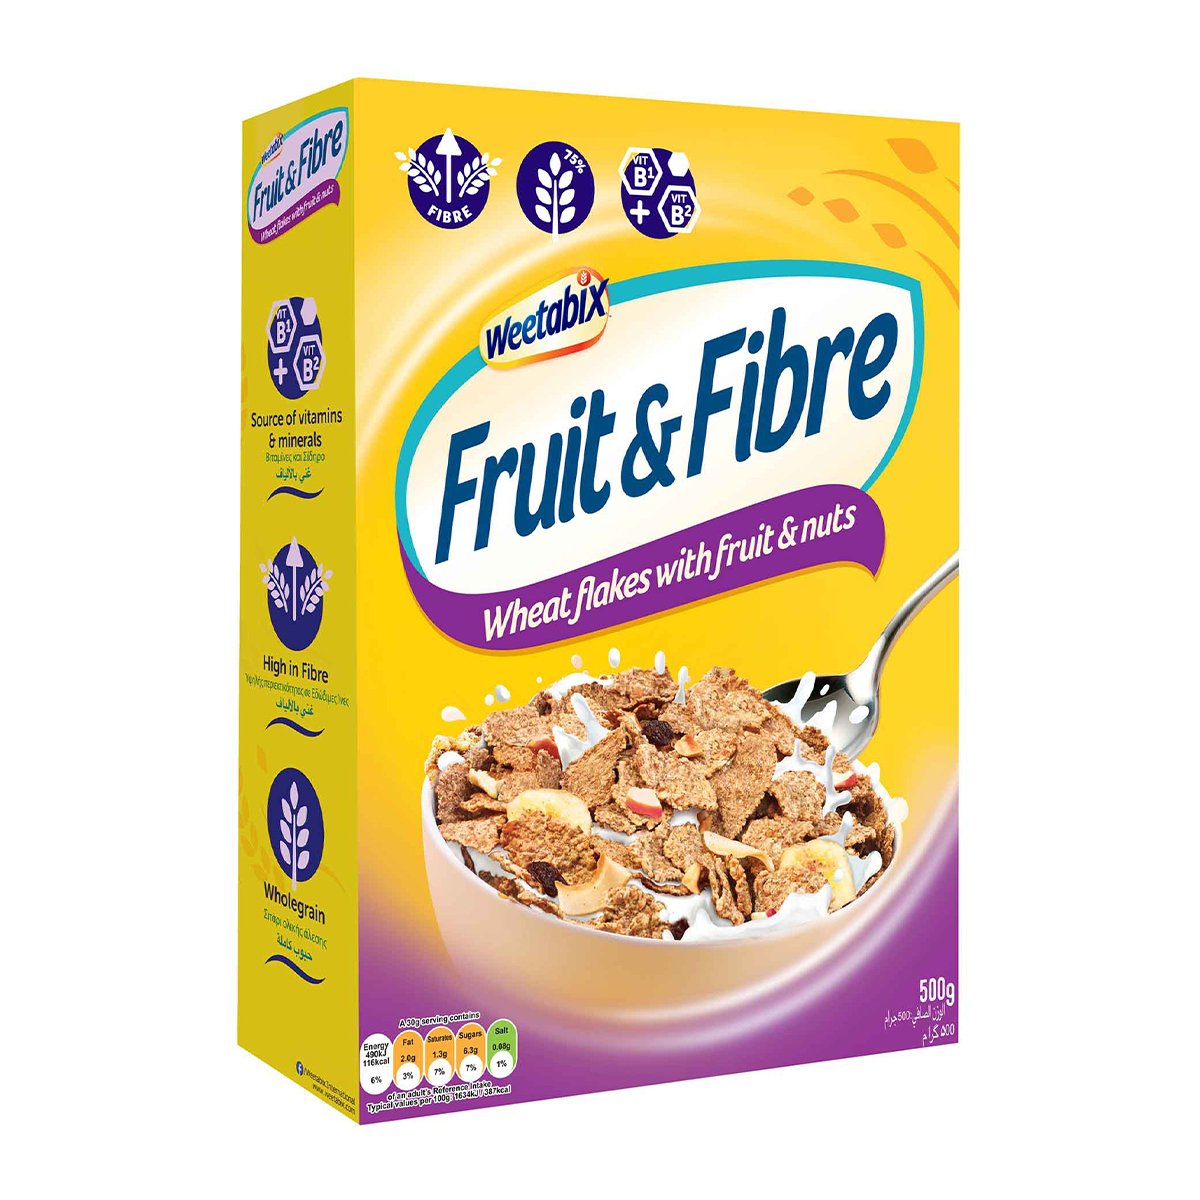 Weetabix Fruit & Fibre Wheat Flakes, 500 g